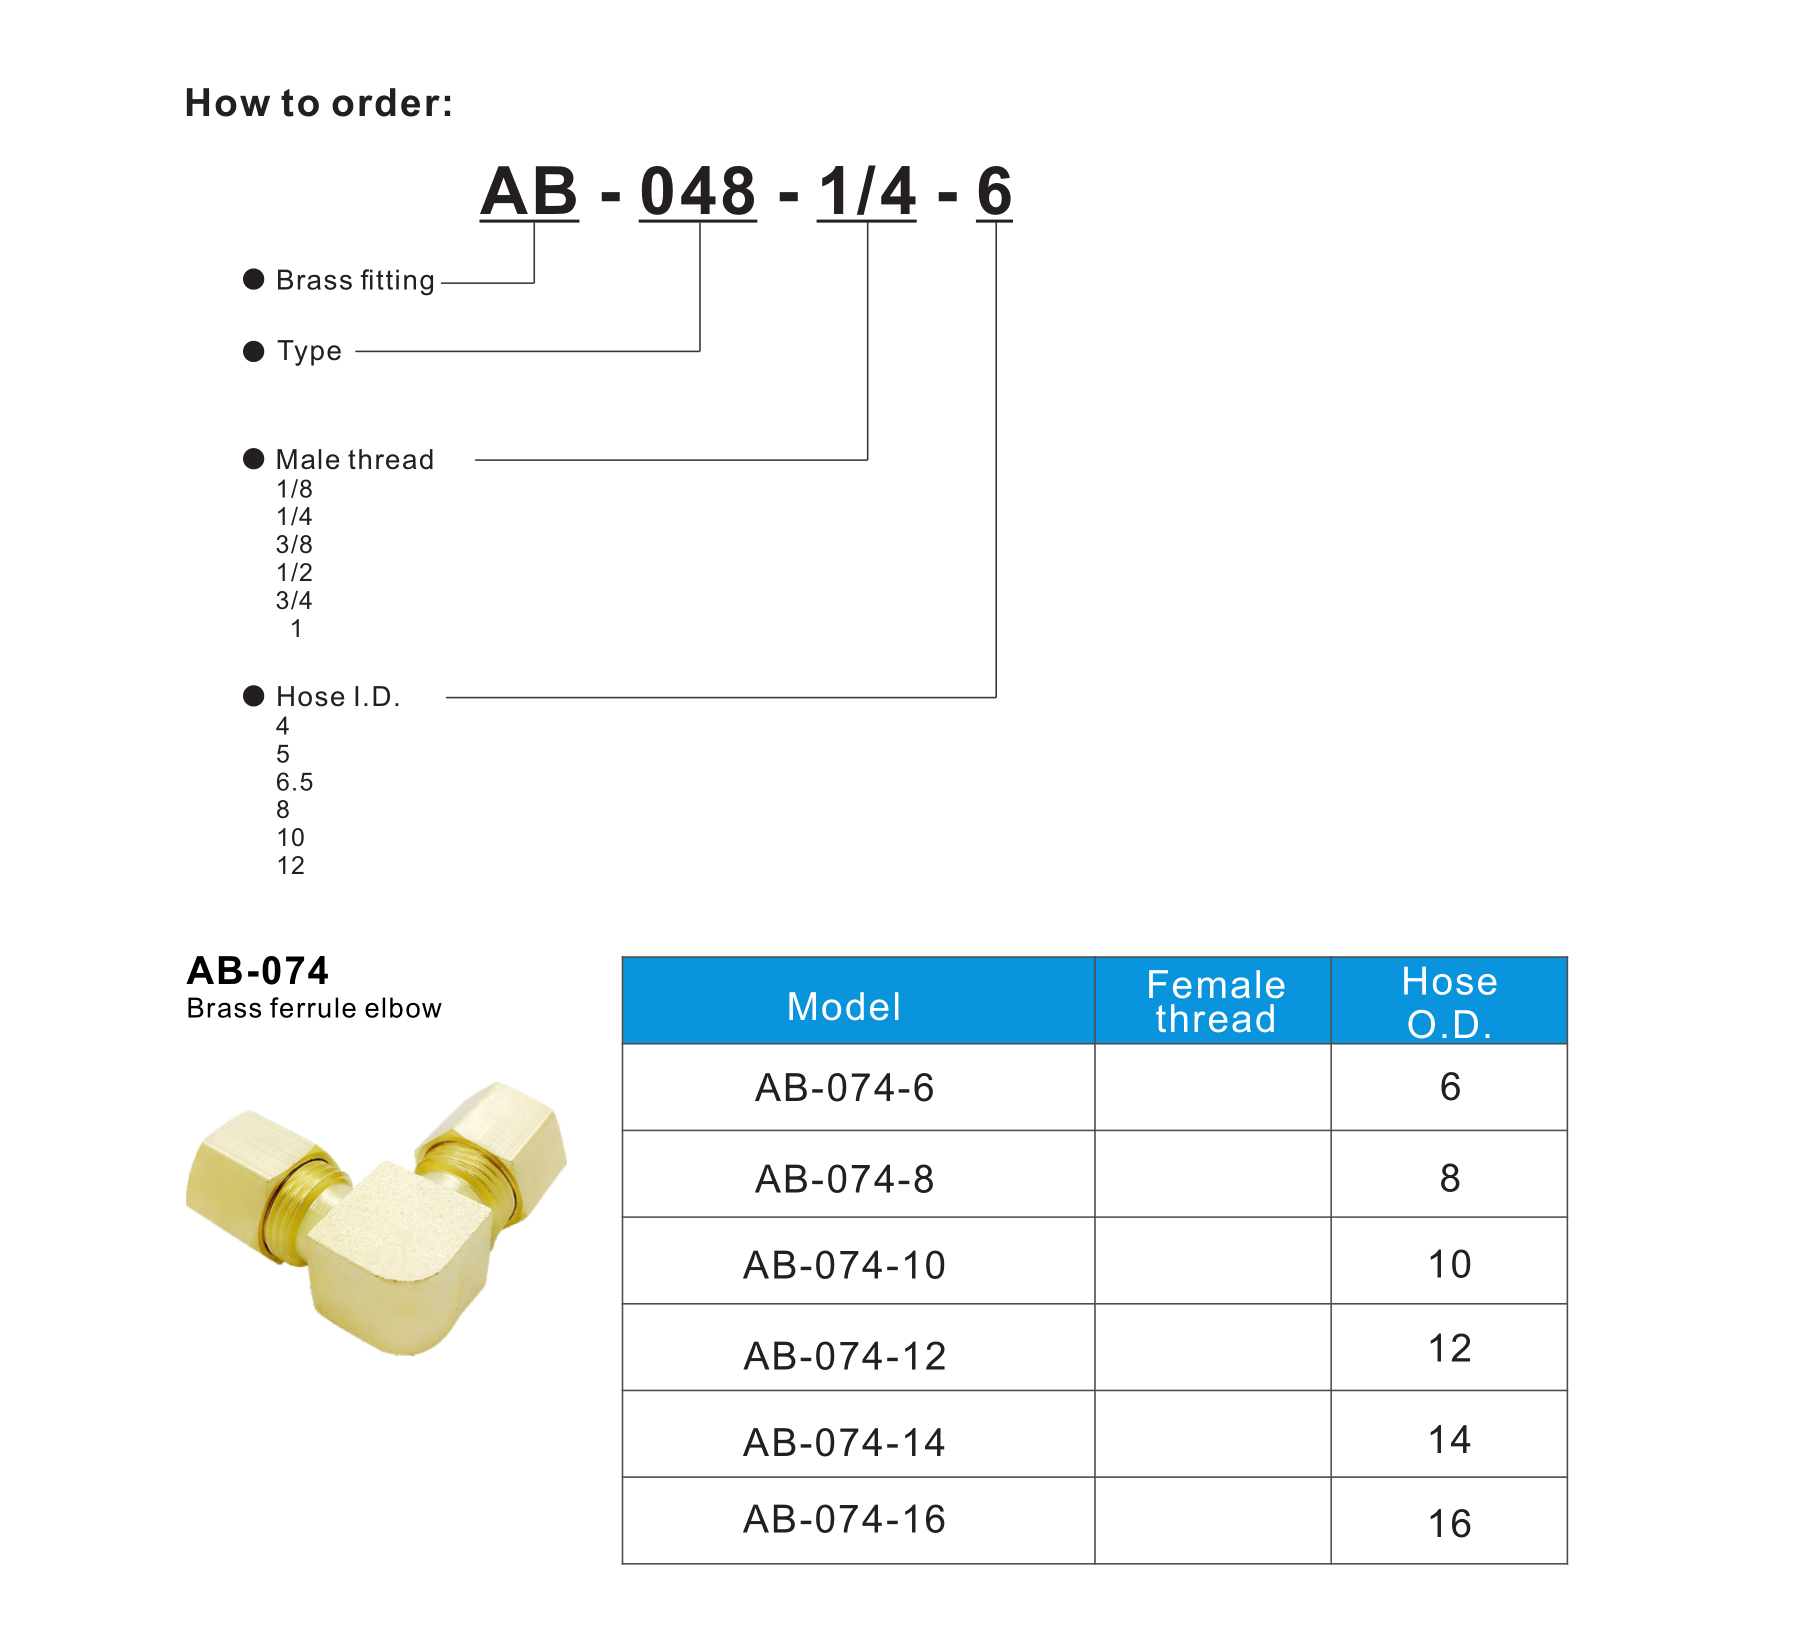 AB-074 Brass ferrule elbow